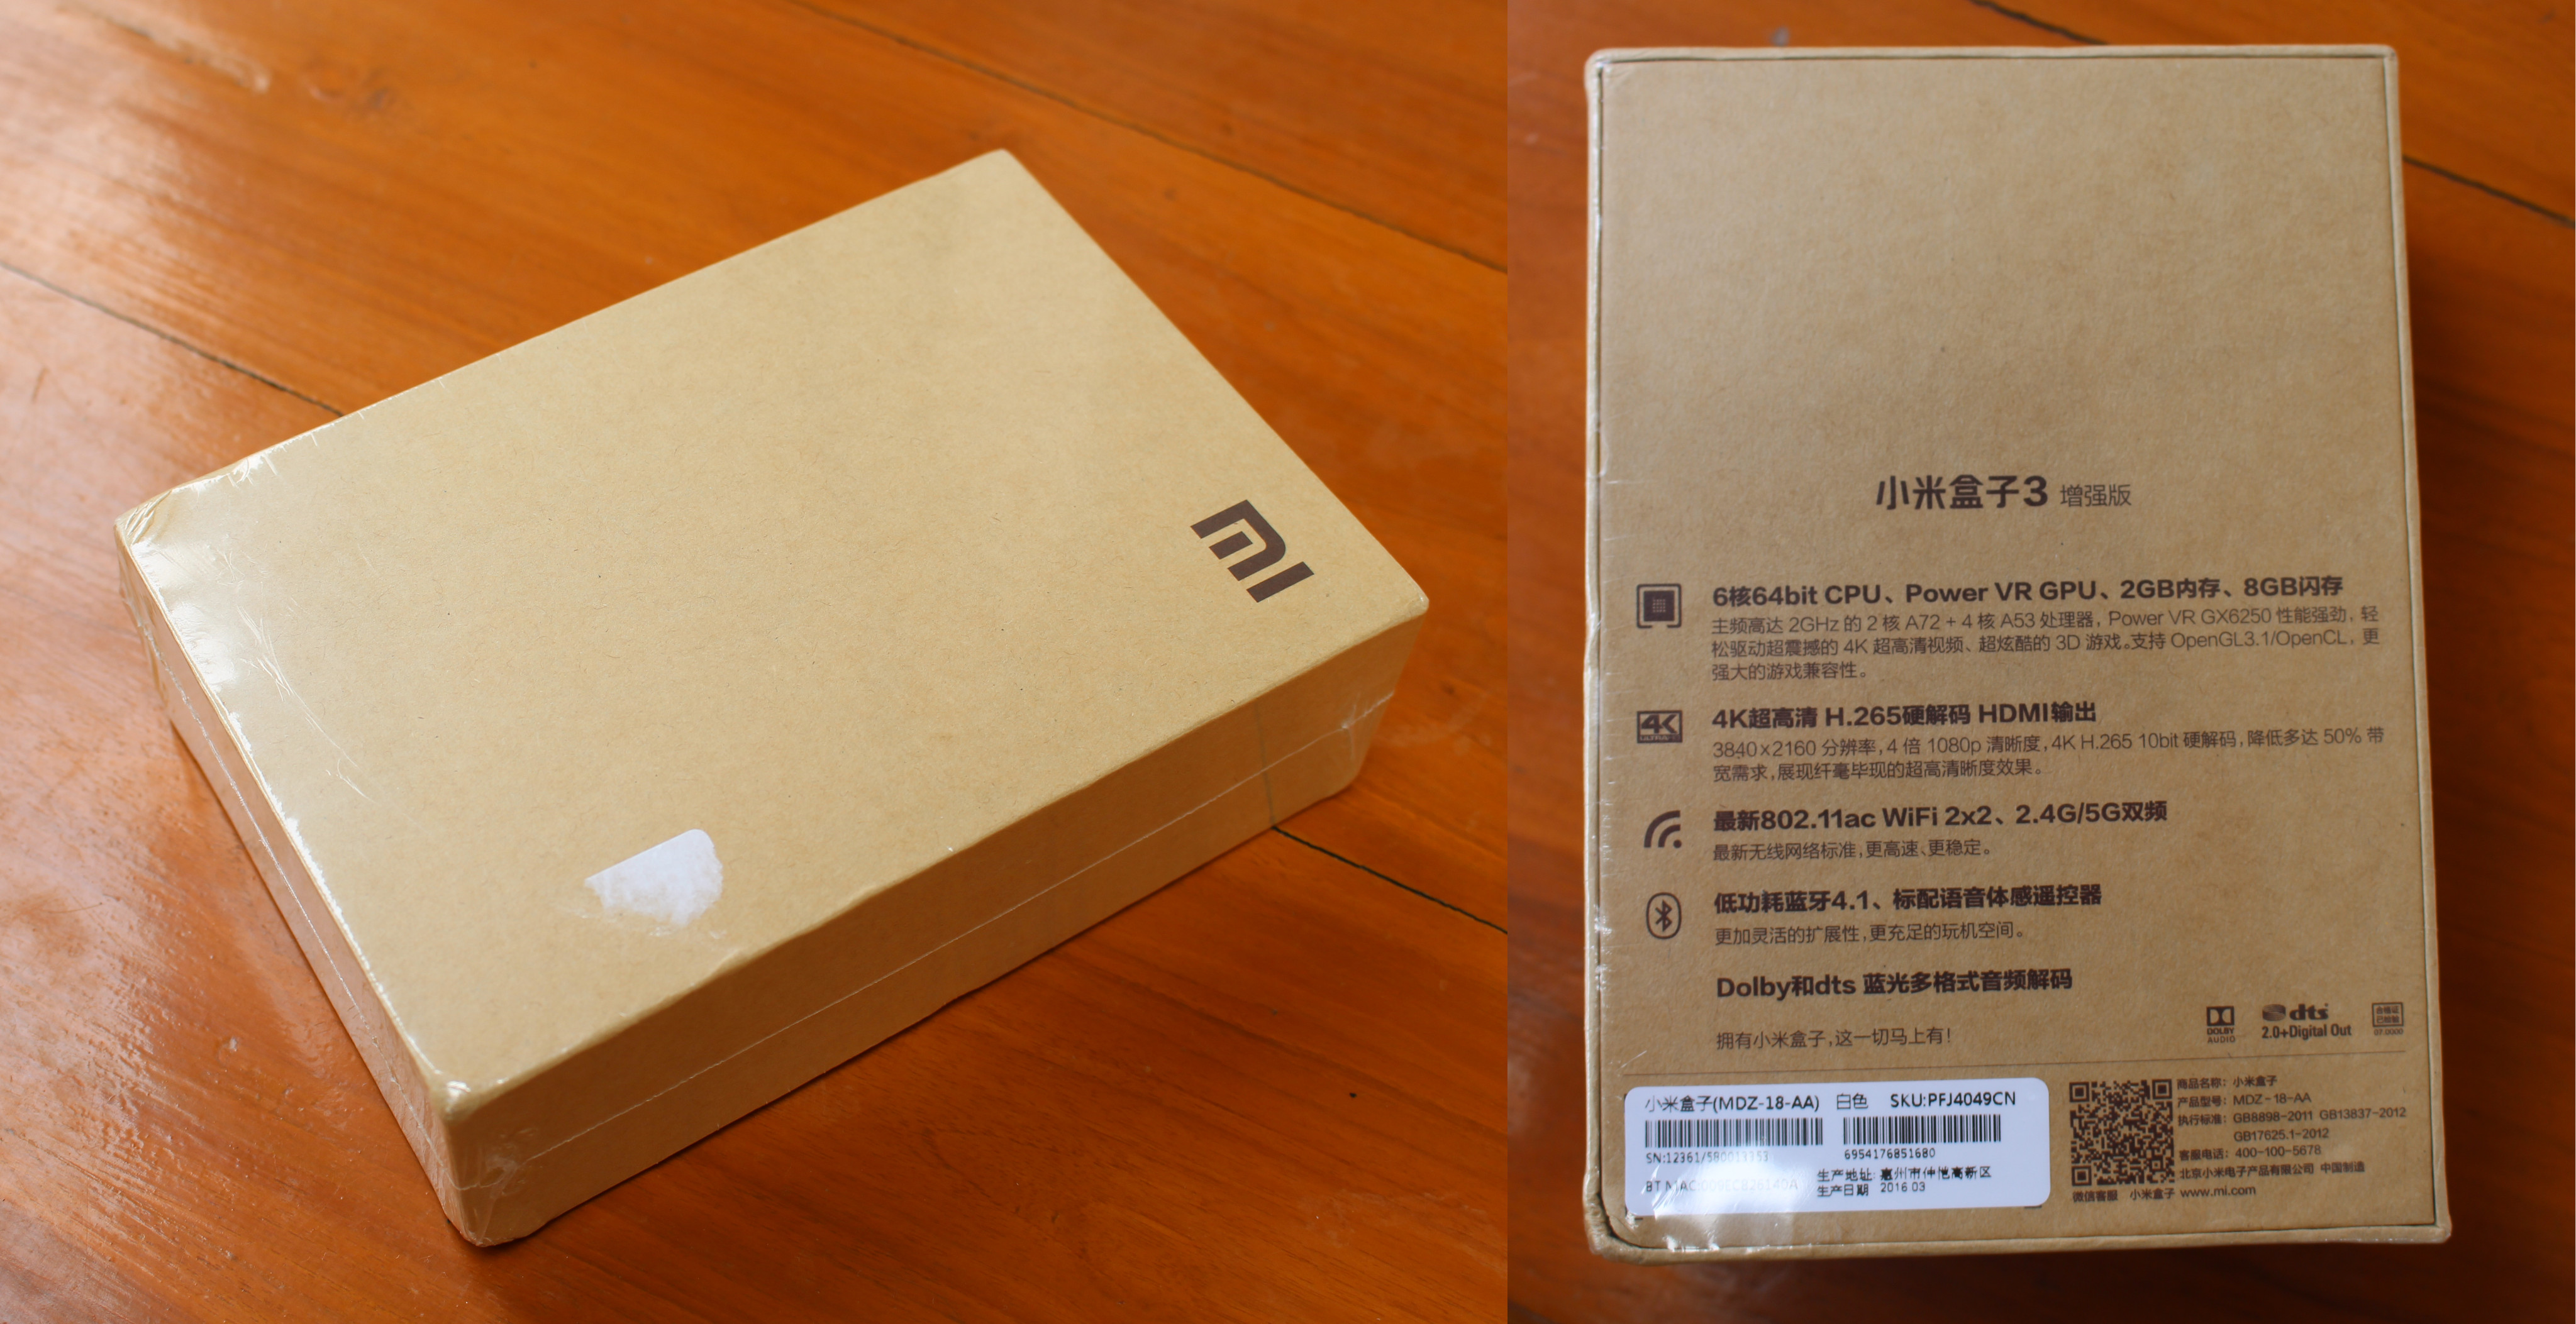 Buy In Stock International Version Original Xiaomi Mi Box 3